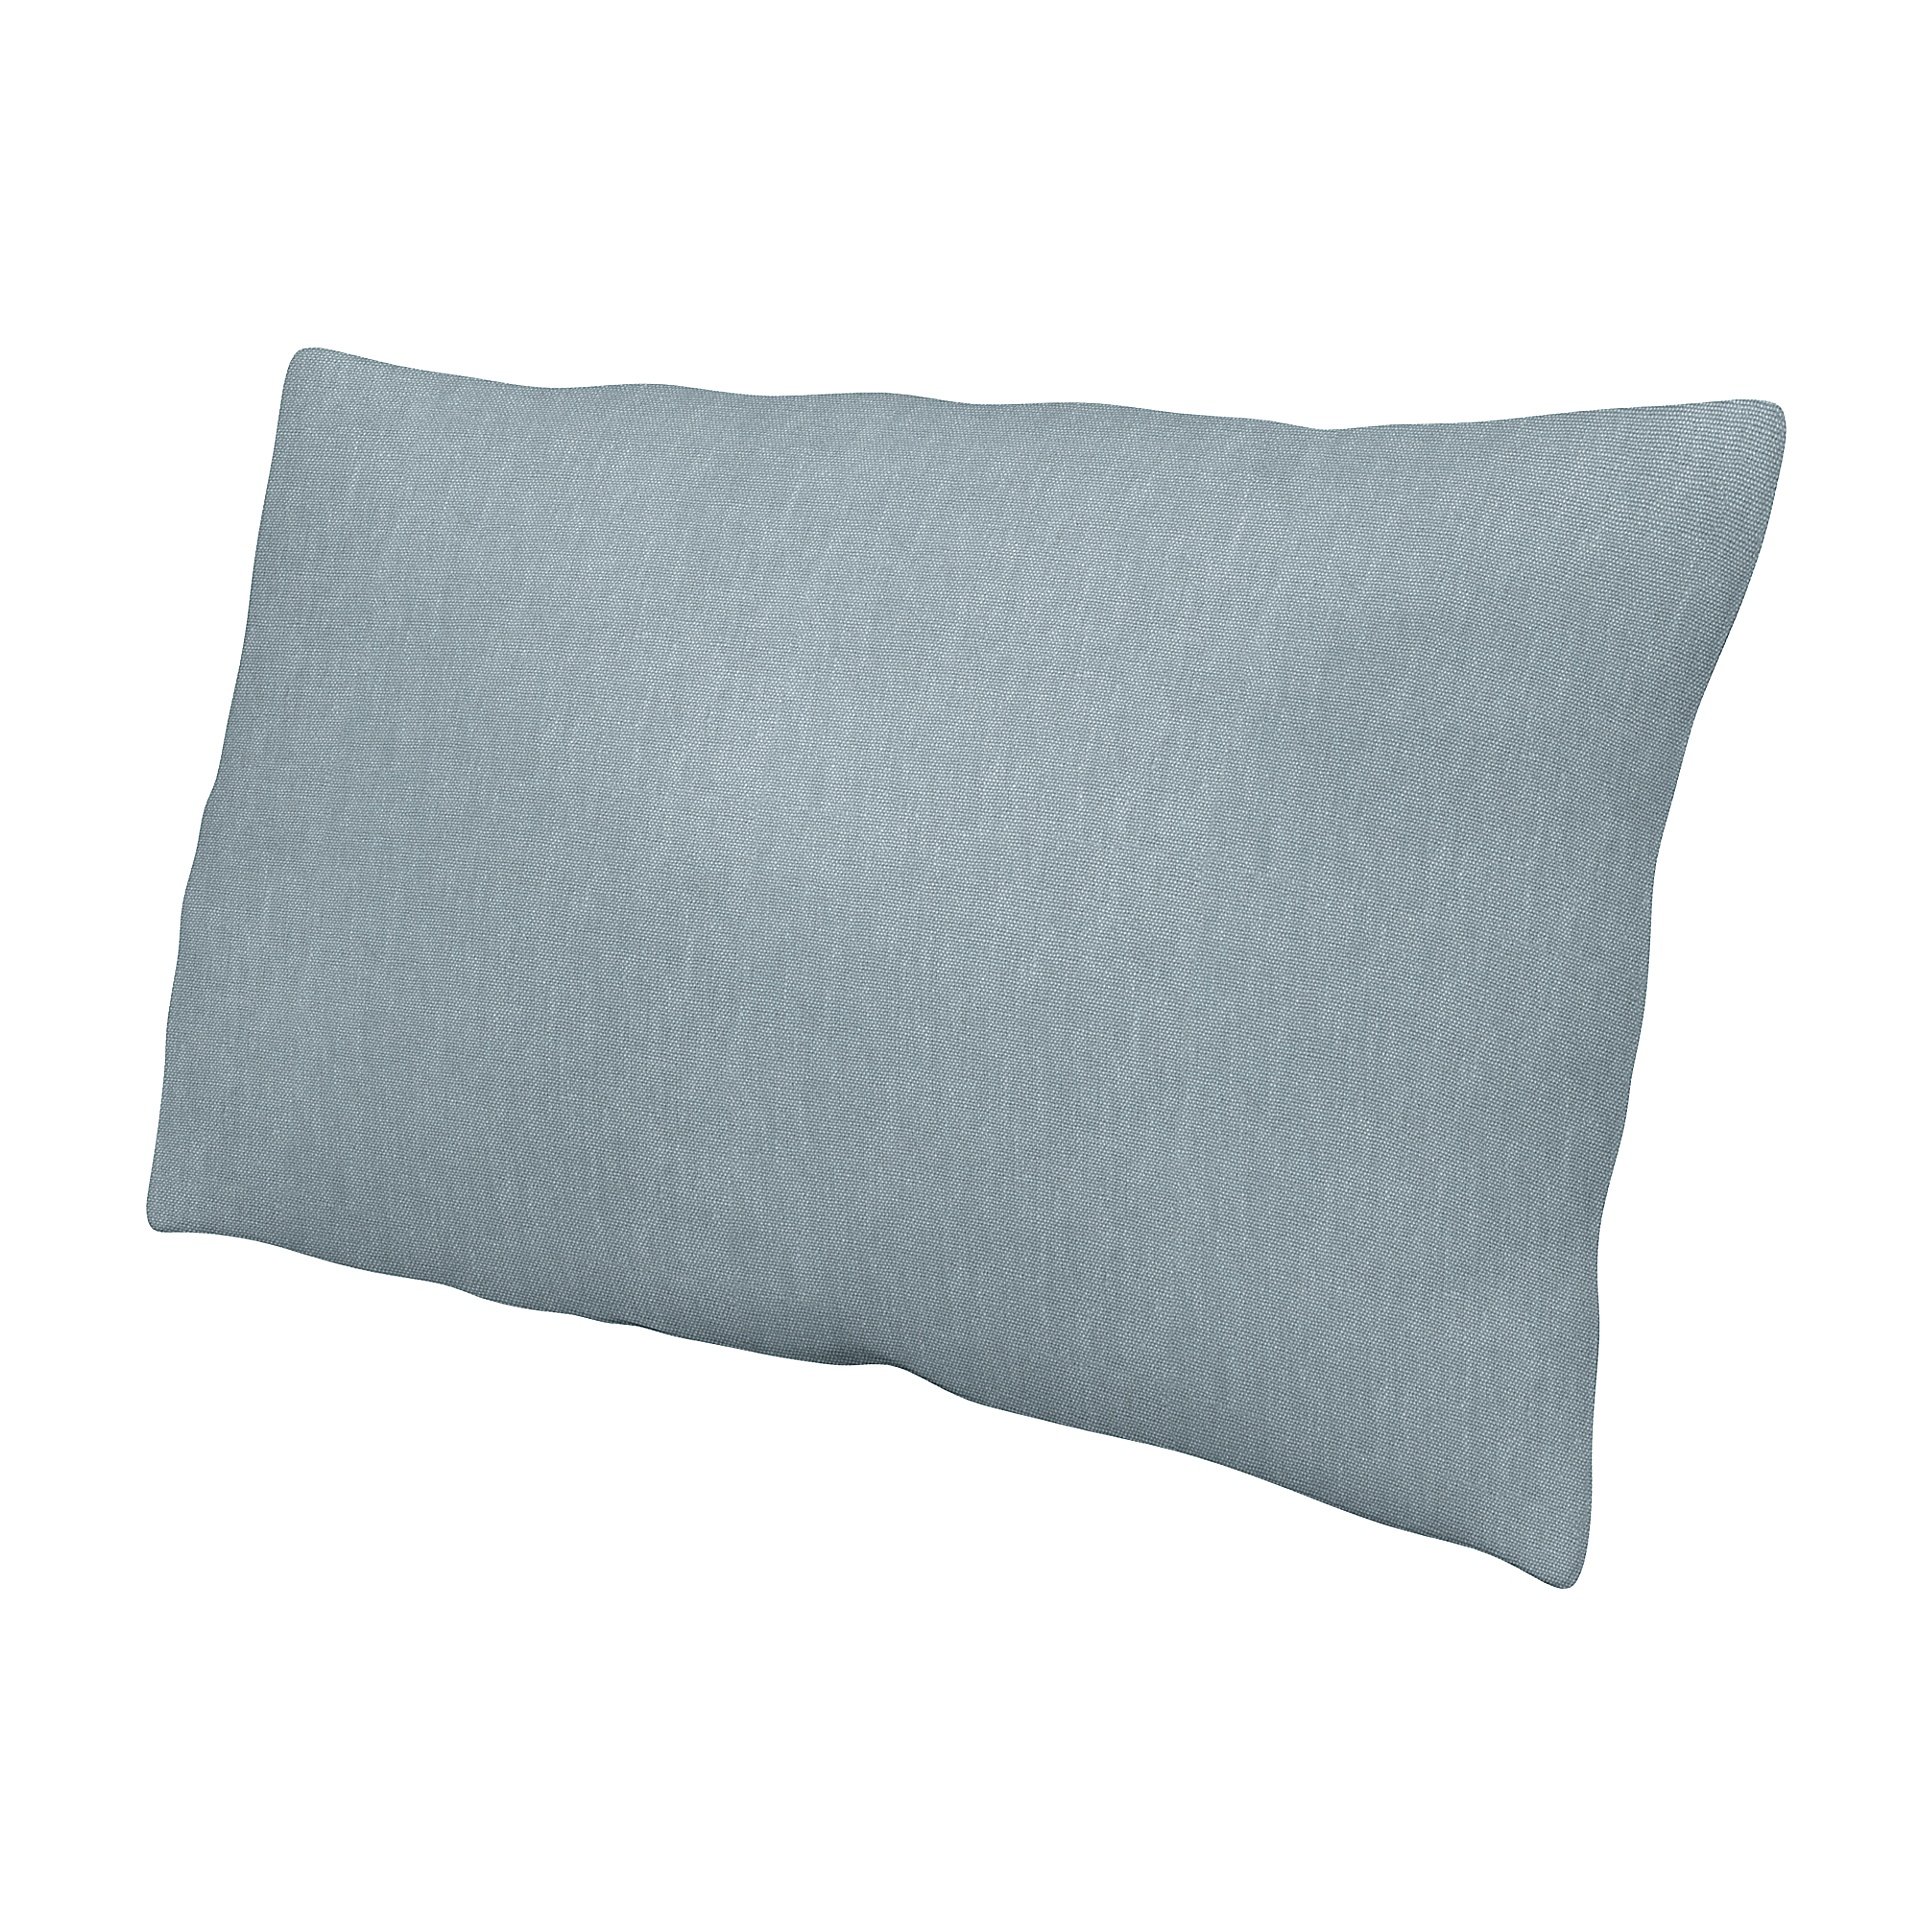 IKEA - Cushion Cover Ektorp 40x70 cm, Dusty Blue, Linen - Bemz